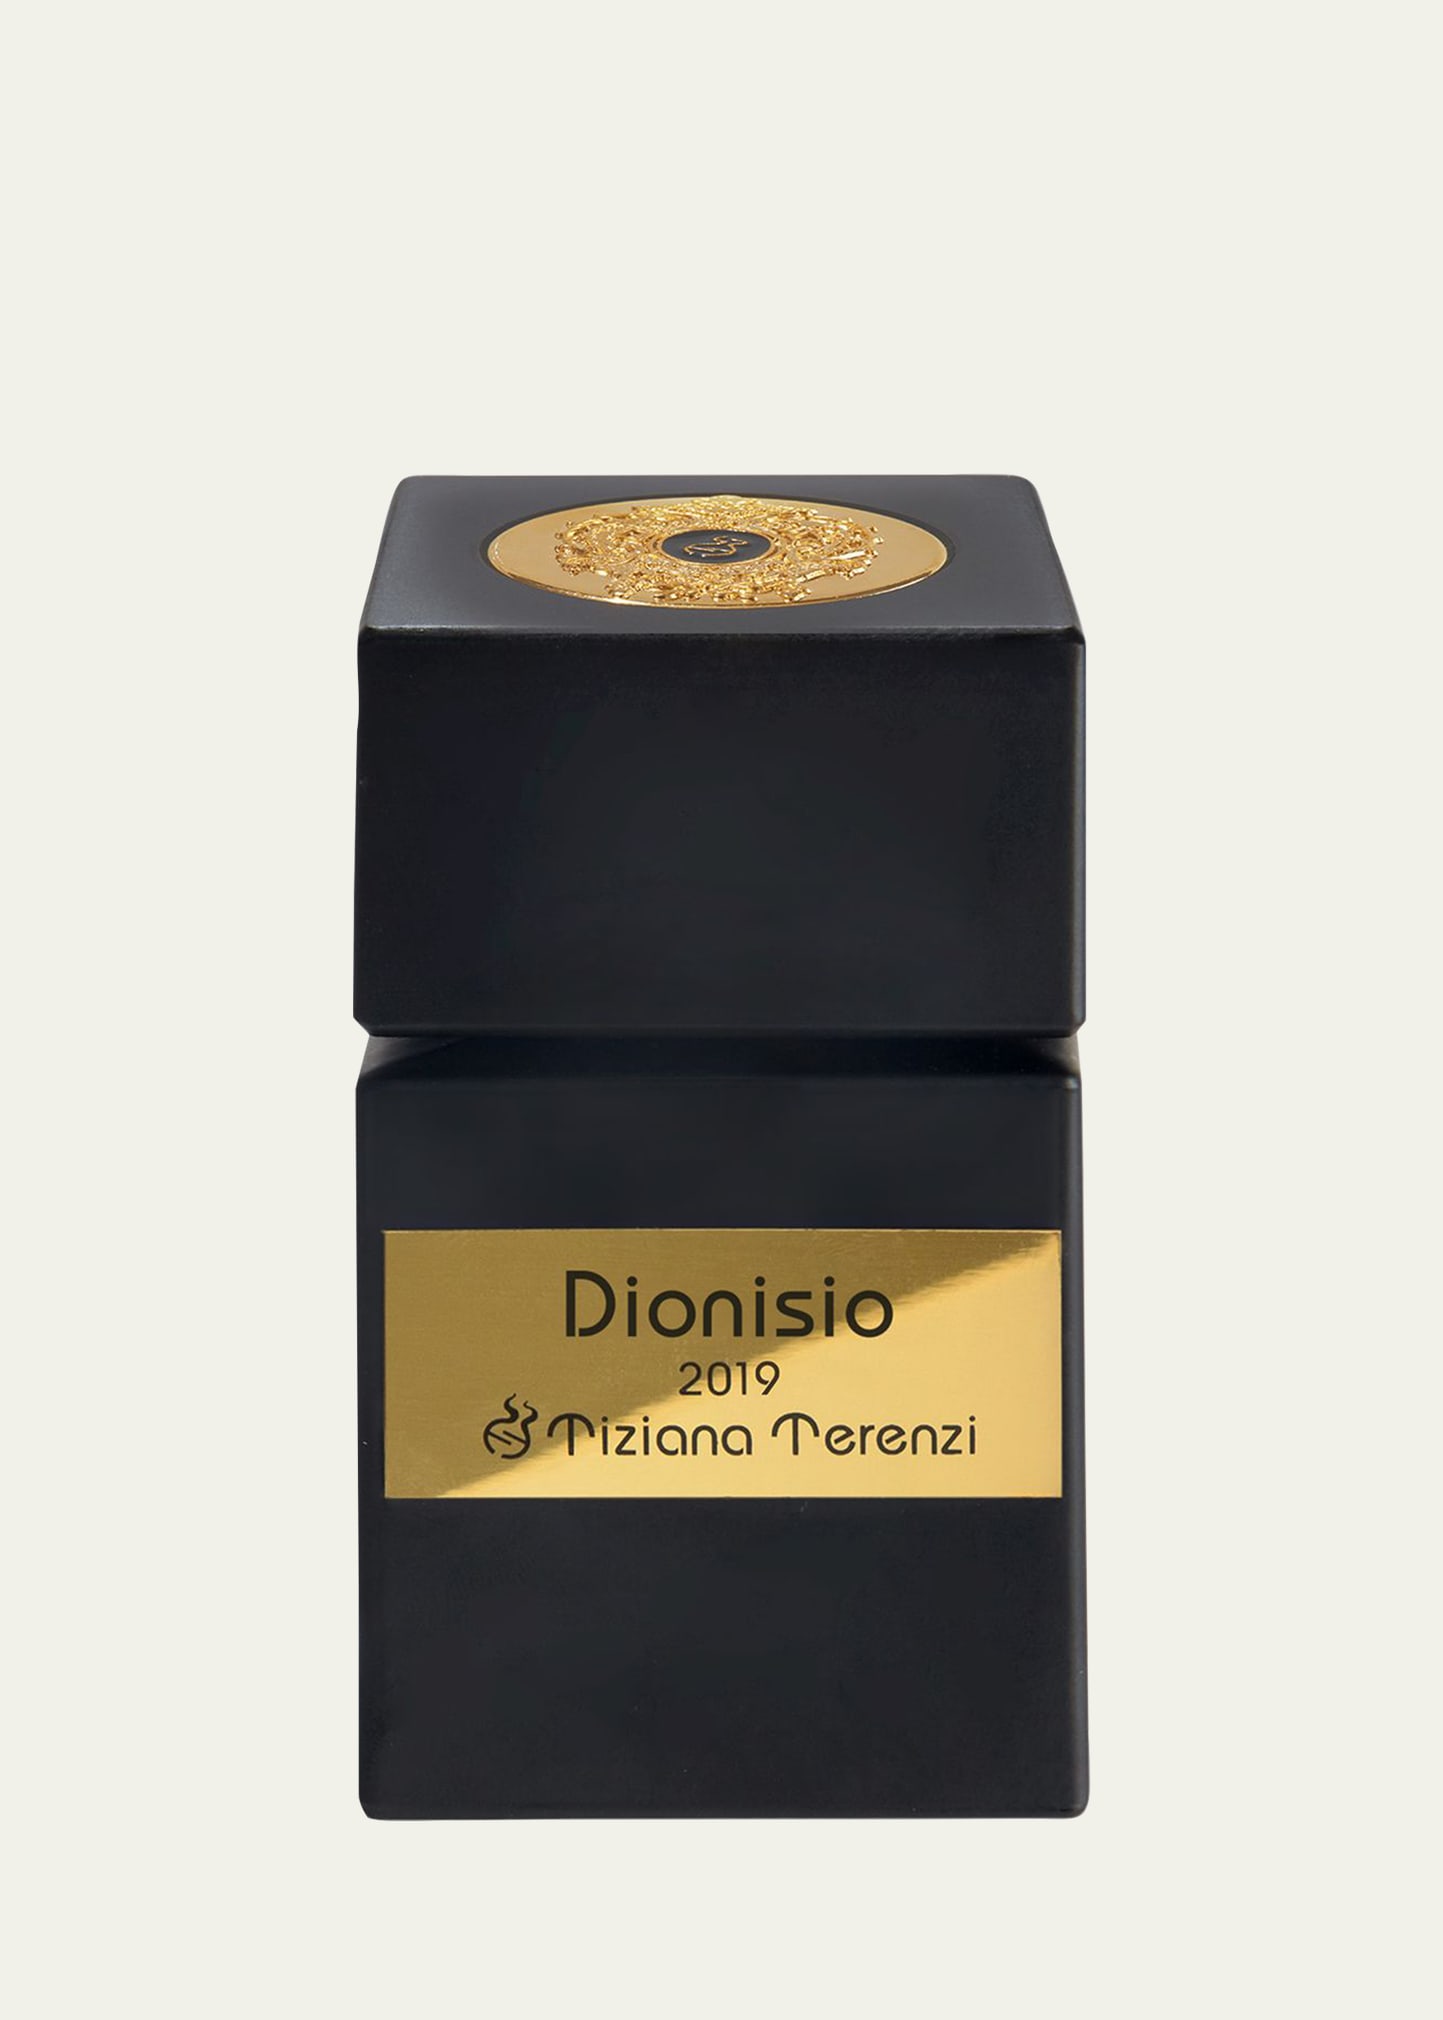 Dionisio 2019 Anniversary Extrait de Parfum, 3.4 oz.